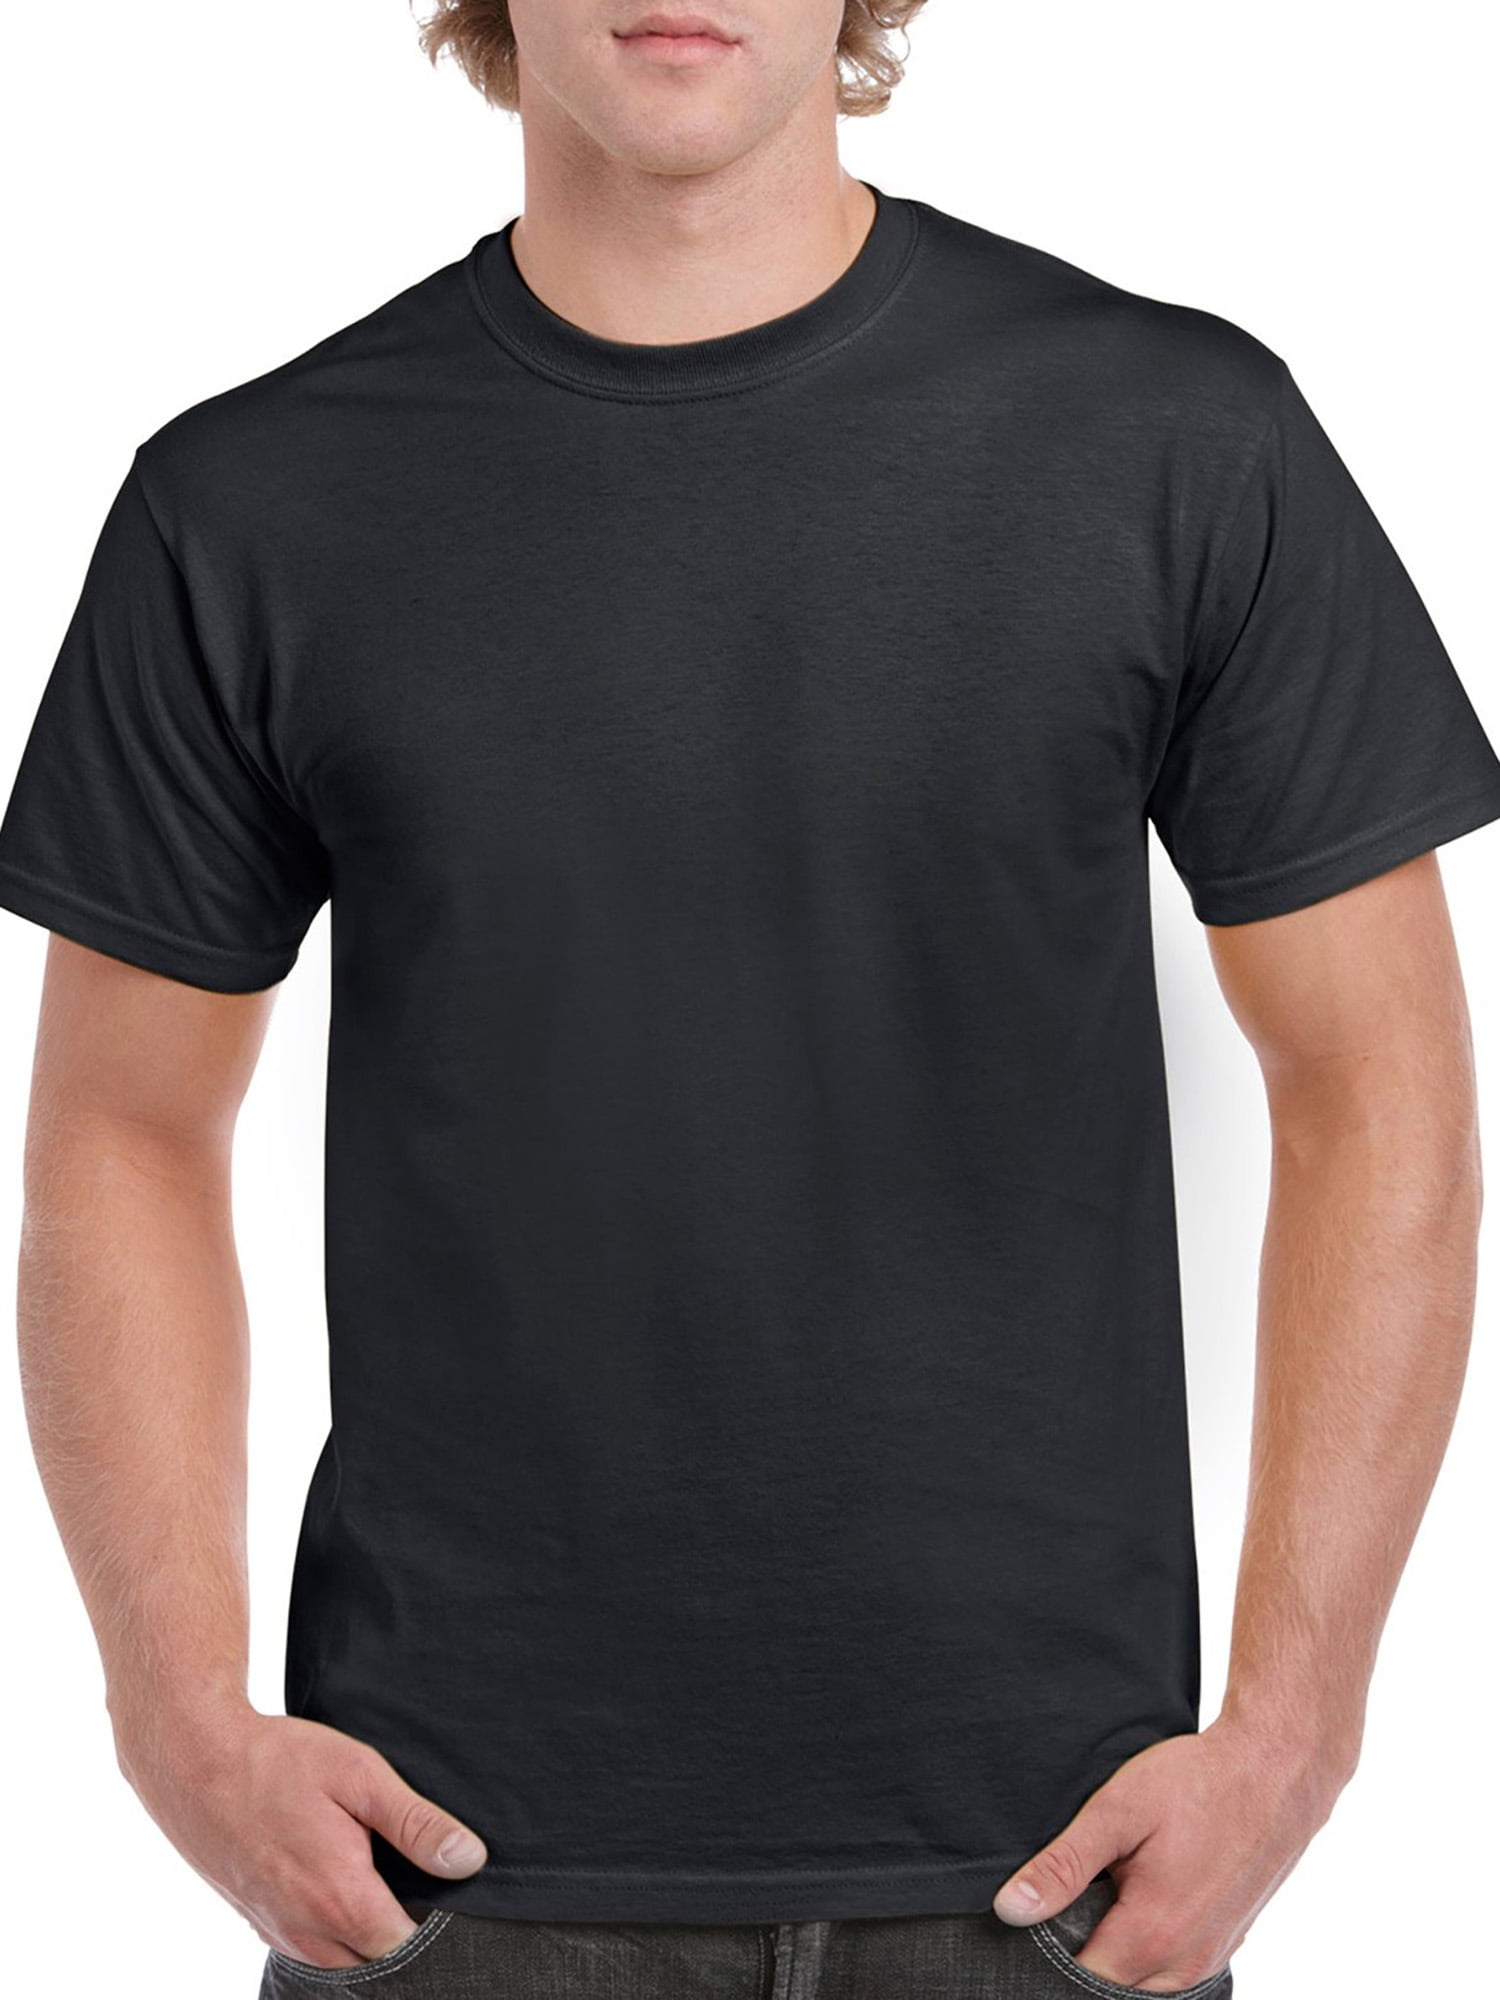 Gildan Adult Cotton Short Sleeve Black Crew T-Shirt, 1-Pack, L